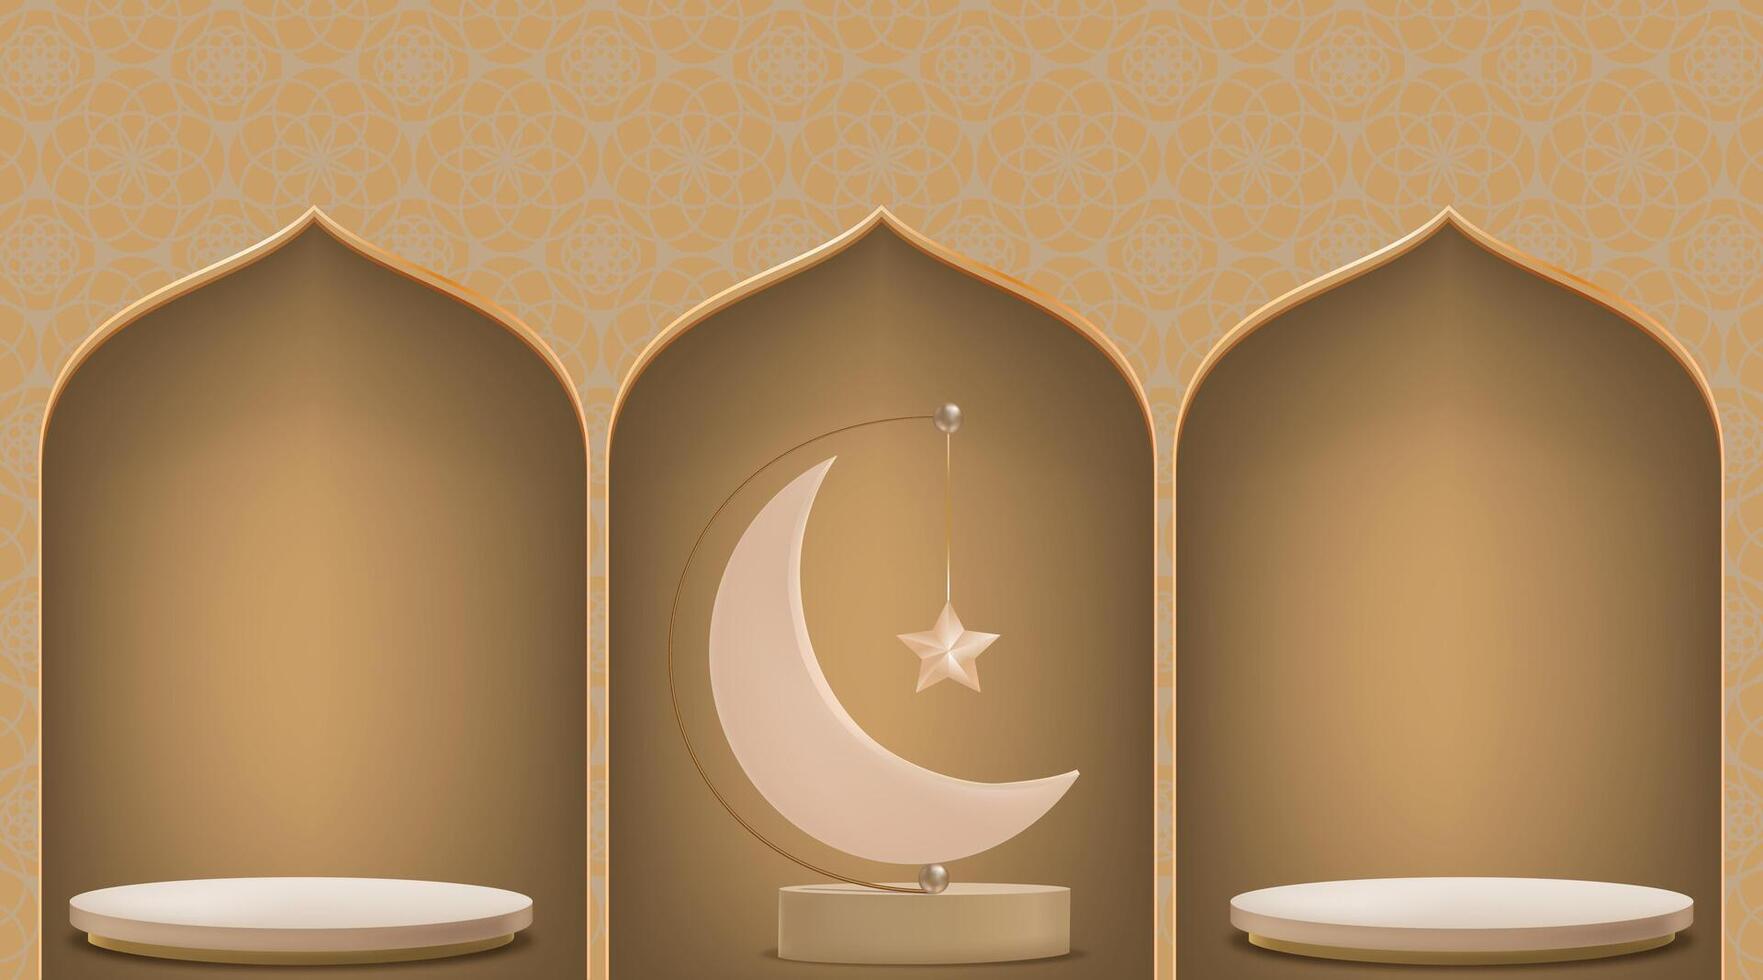 Eid al Adha Mubarak greeting design with Crescent Moon and Star hanging on 3D podium on Beige background.Vector Backdrop of Religion of Muslim Symbolic for Eid al fitr, Ramadan Kareem vector